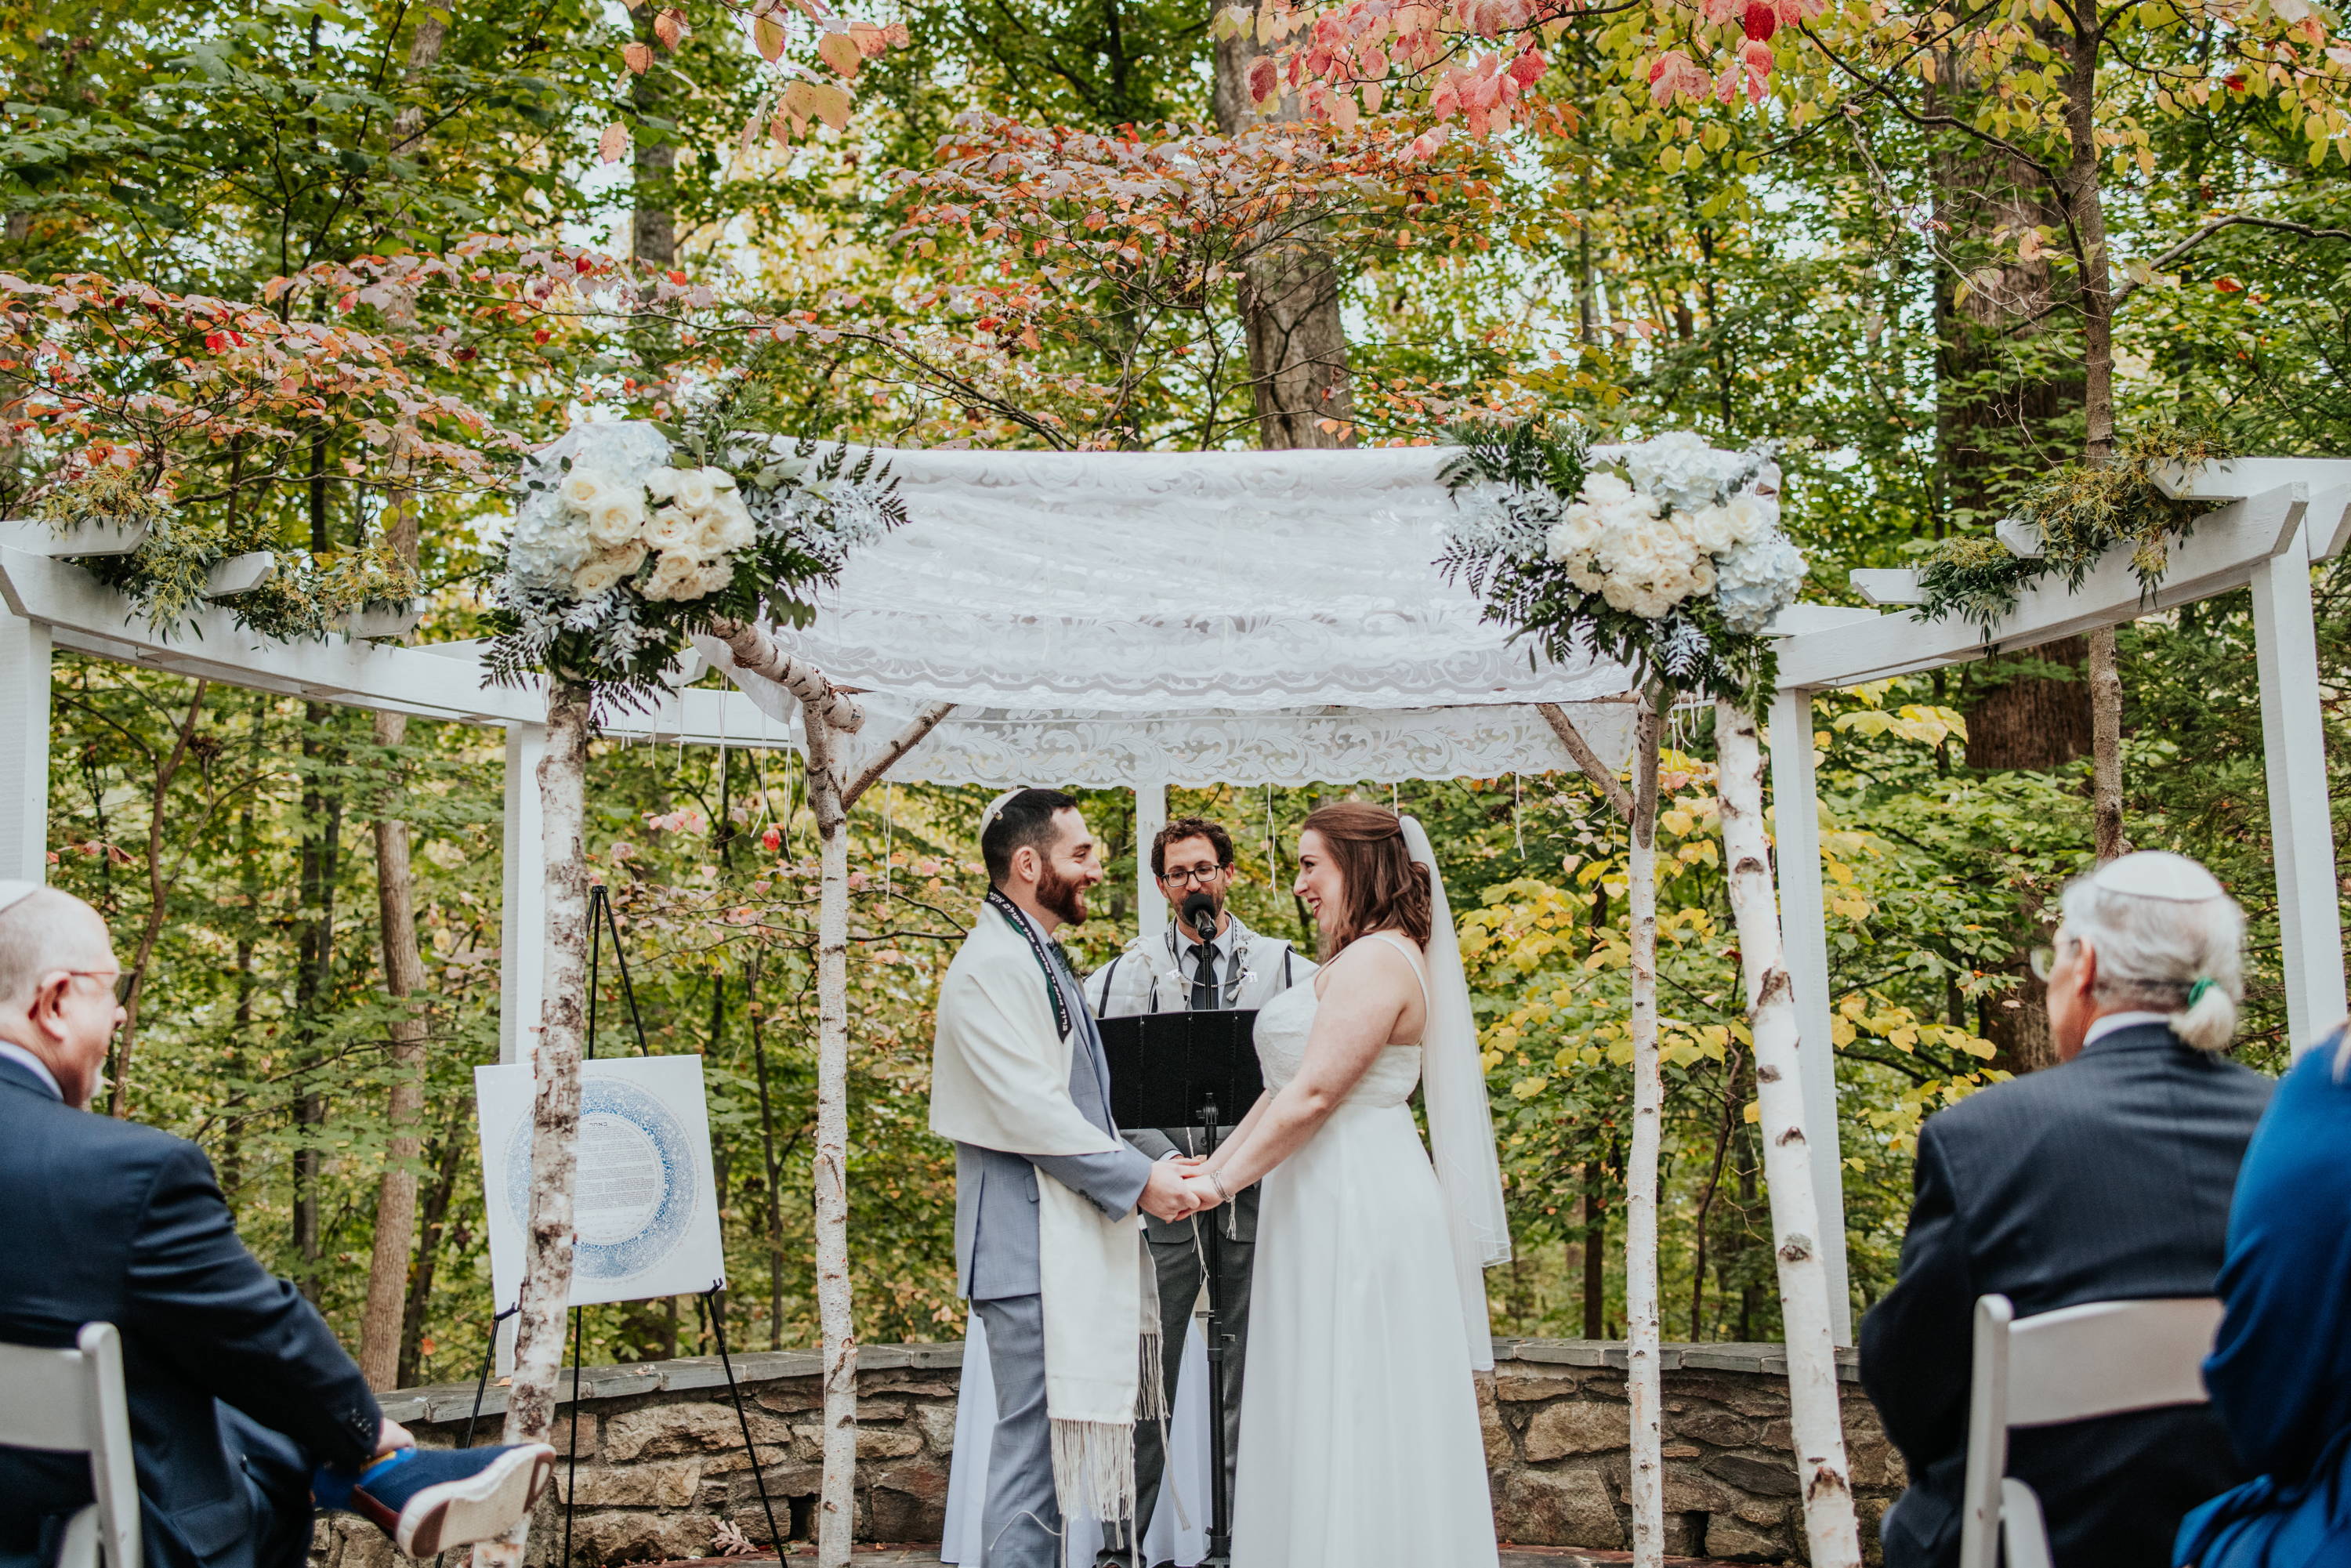 Wedding Chuppah with birch poles and white Flowers,  DIY